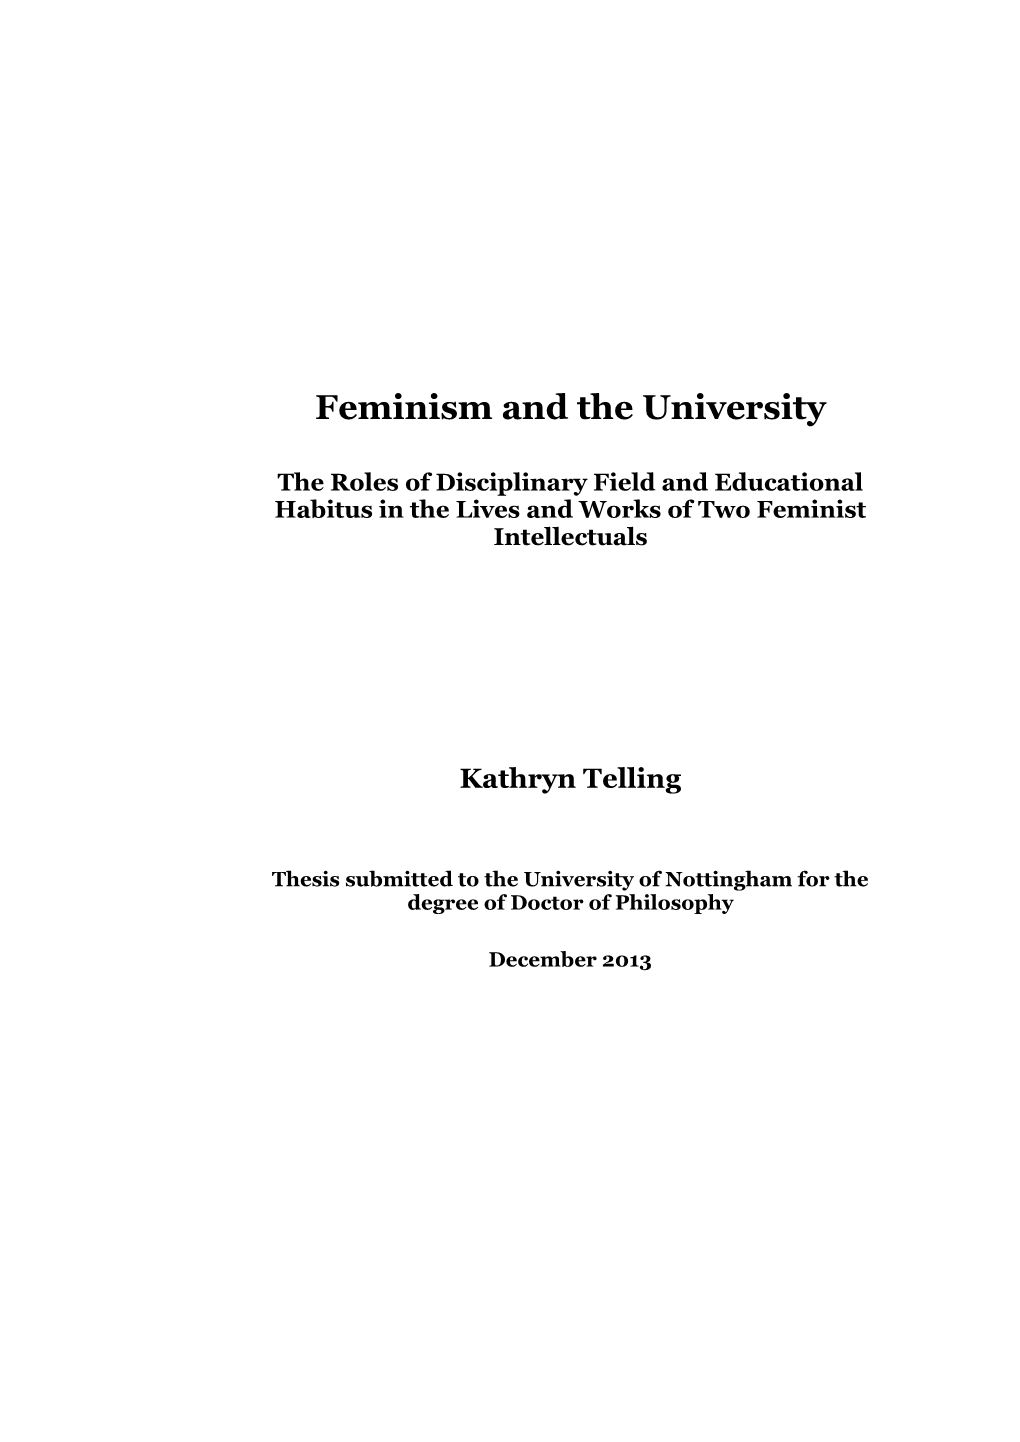 Telling, 'Feminism and the University'.Pdf